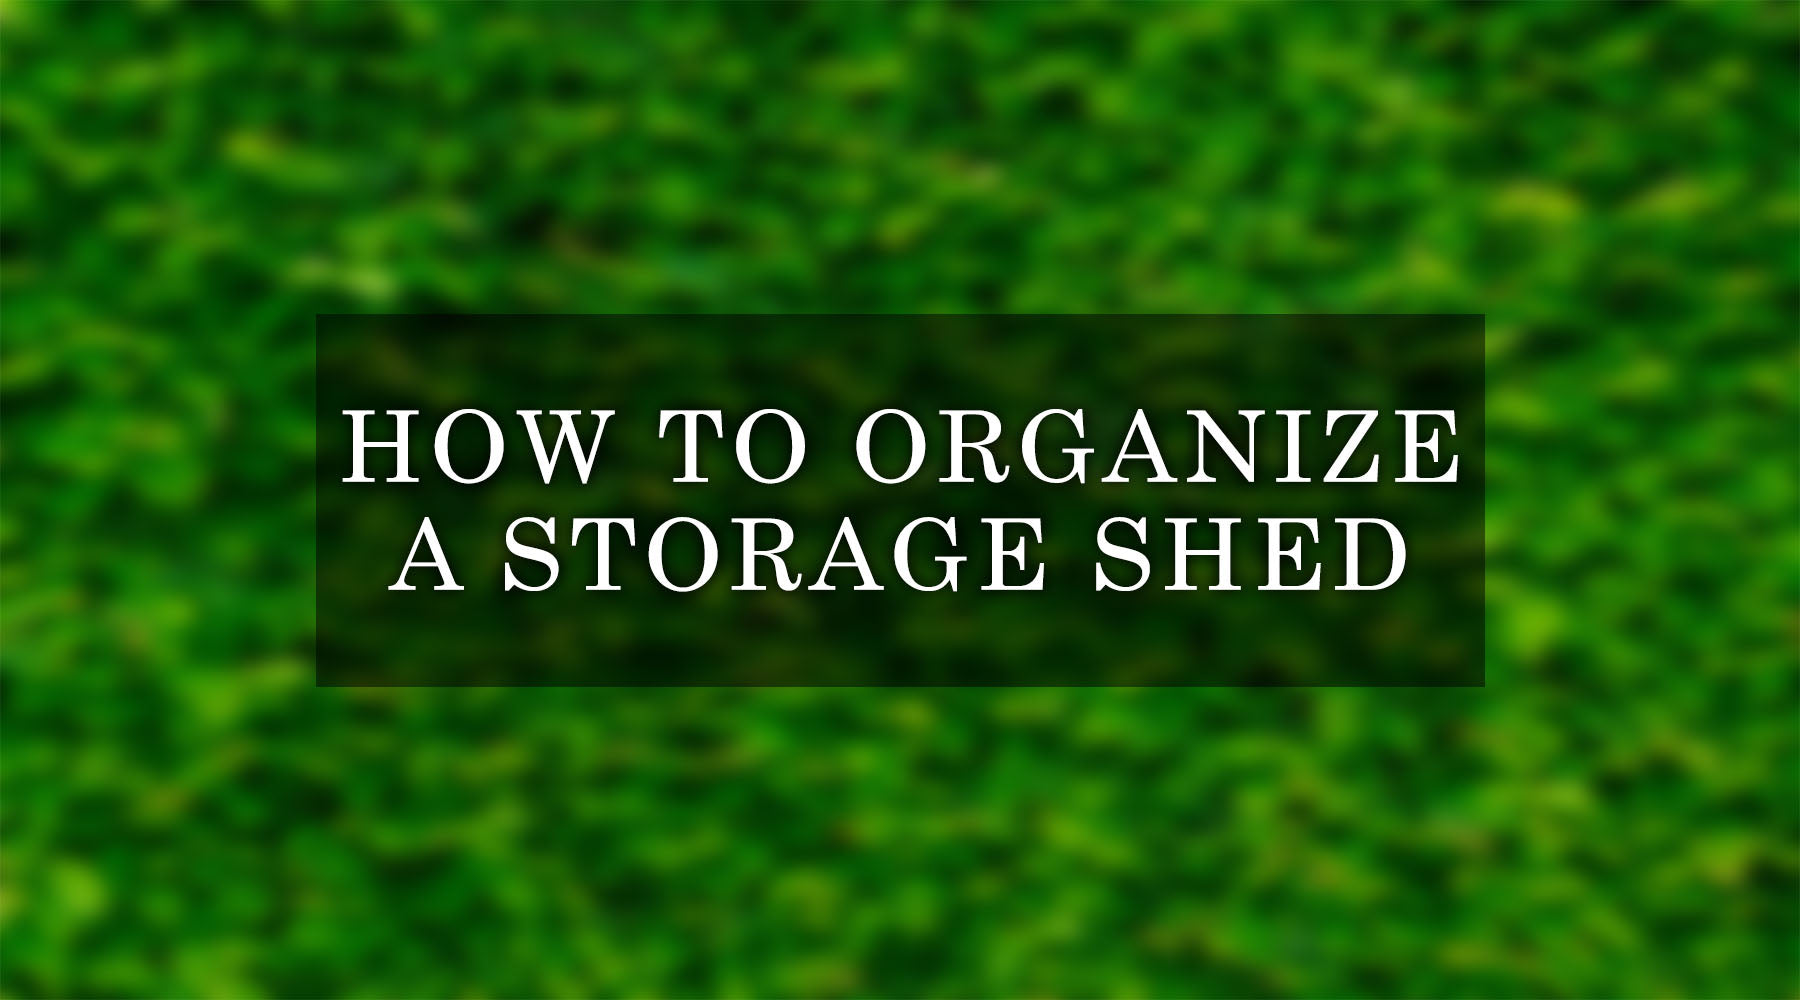 How to Organize a Storage Shed - Organization Ideas